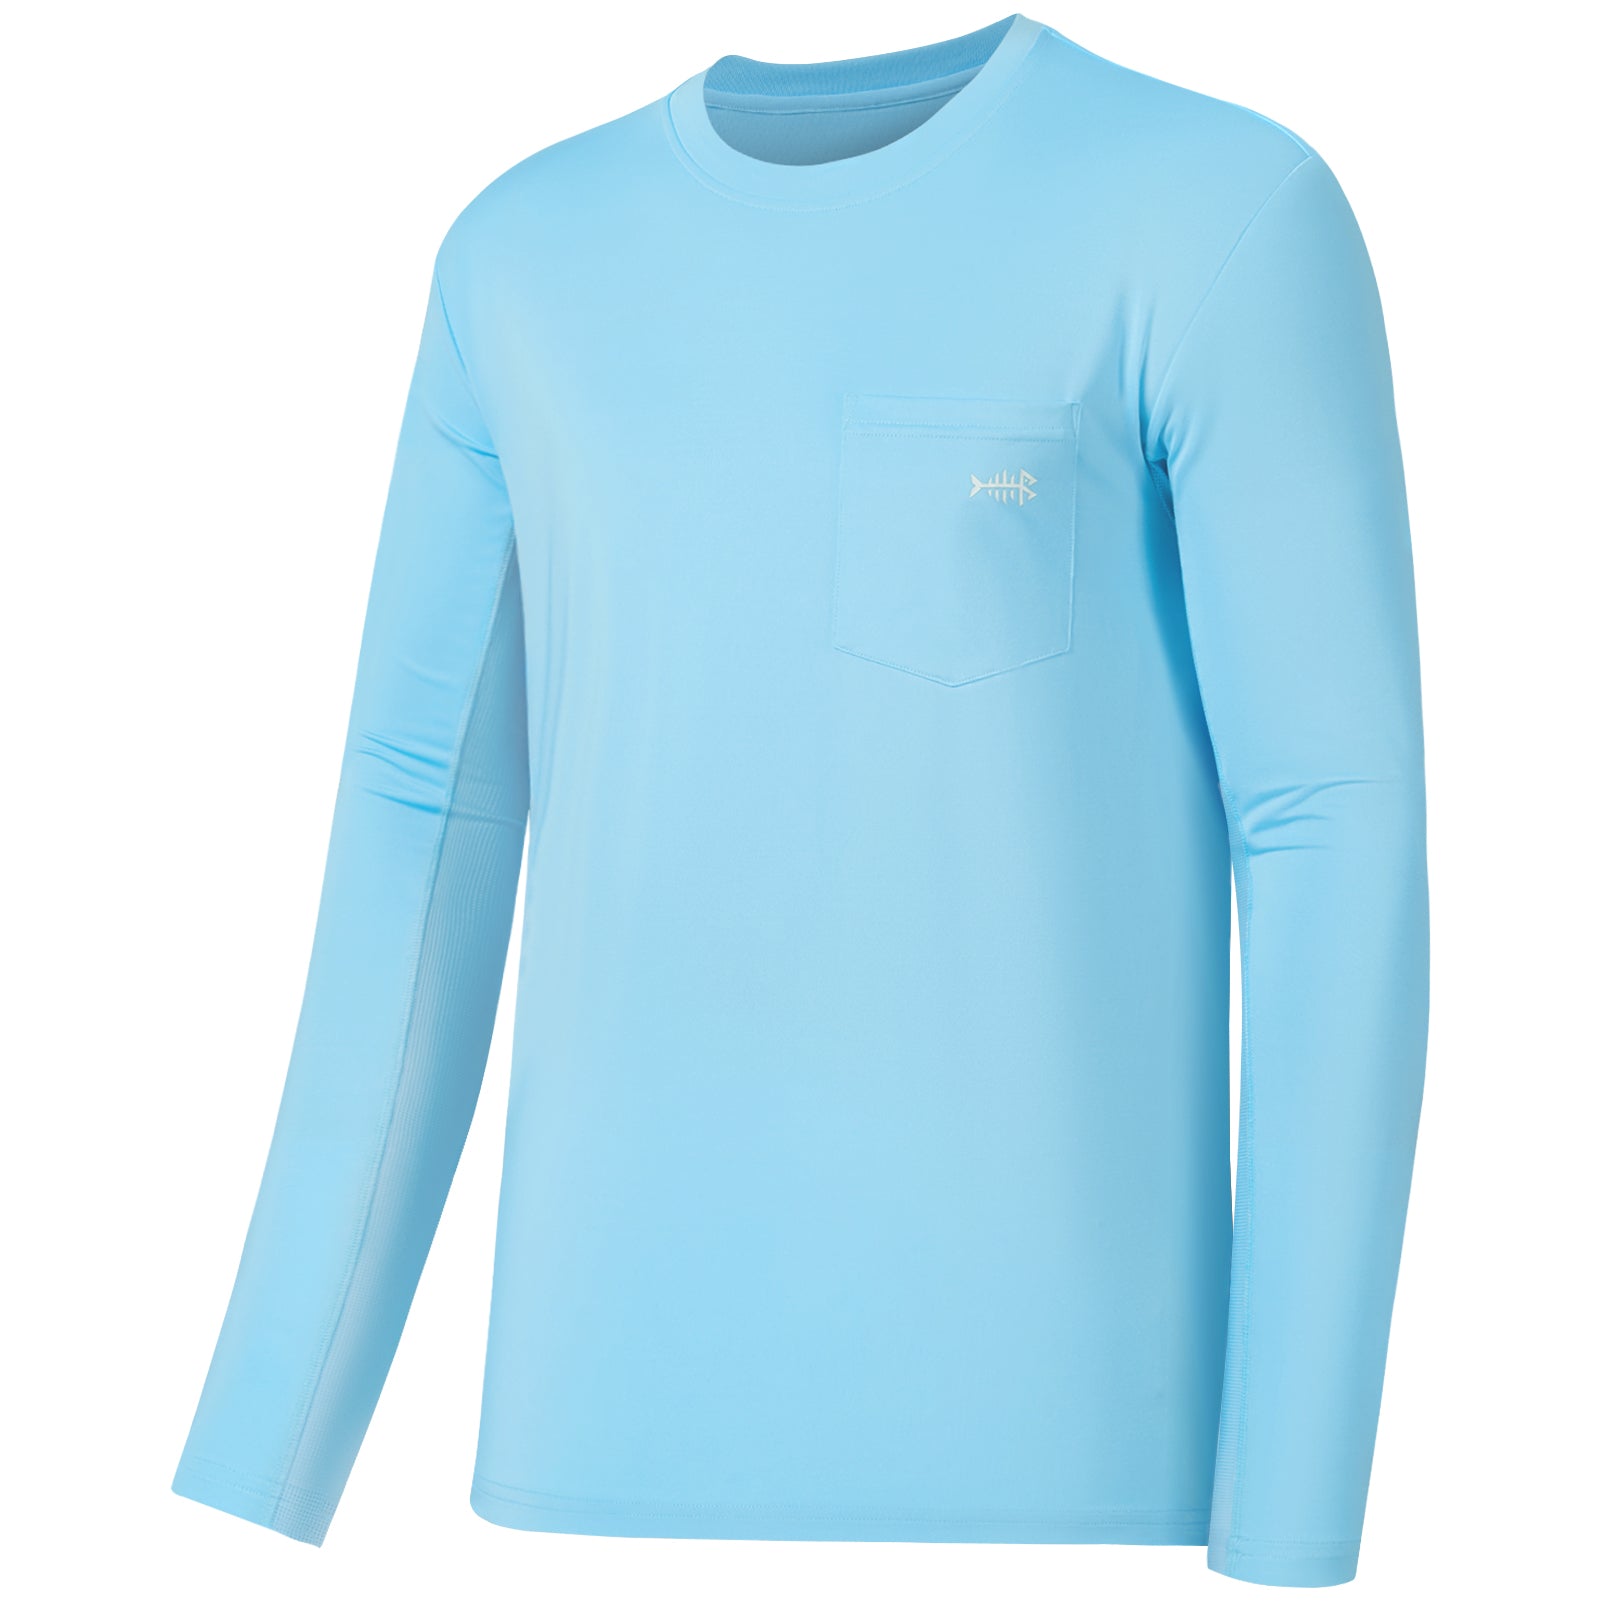 Bassdash Performance Fishing Shirt For Men UPF 50+ Long Sleeve For Fishing Hiking Outdoor Sports, Sky Blue/White Logo / 4XL